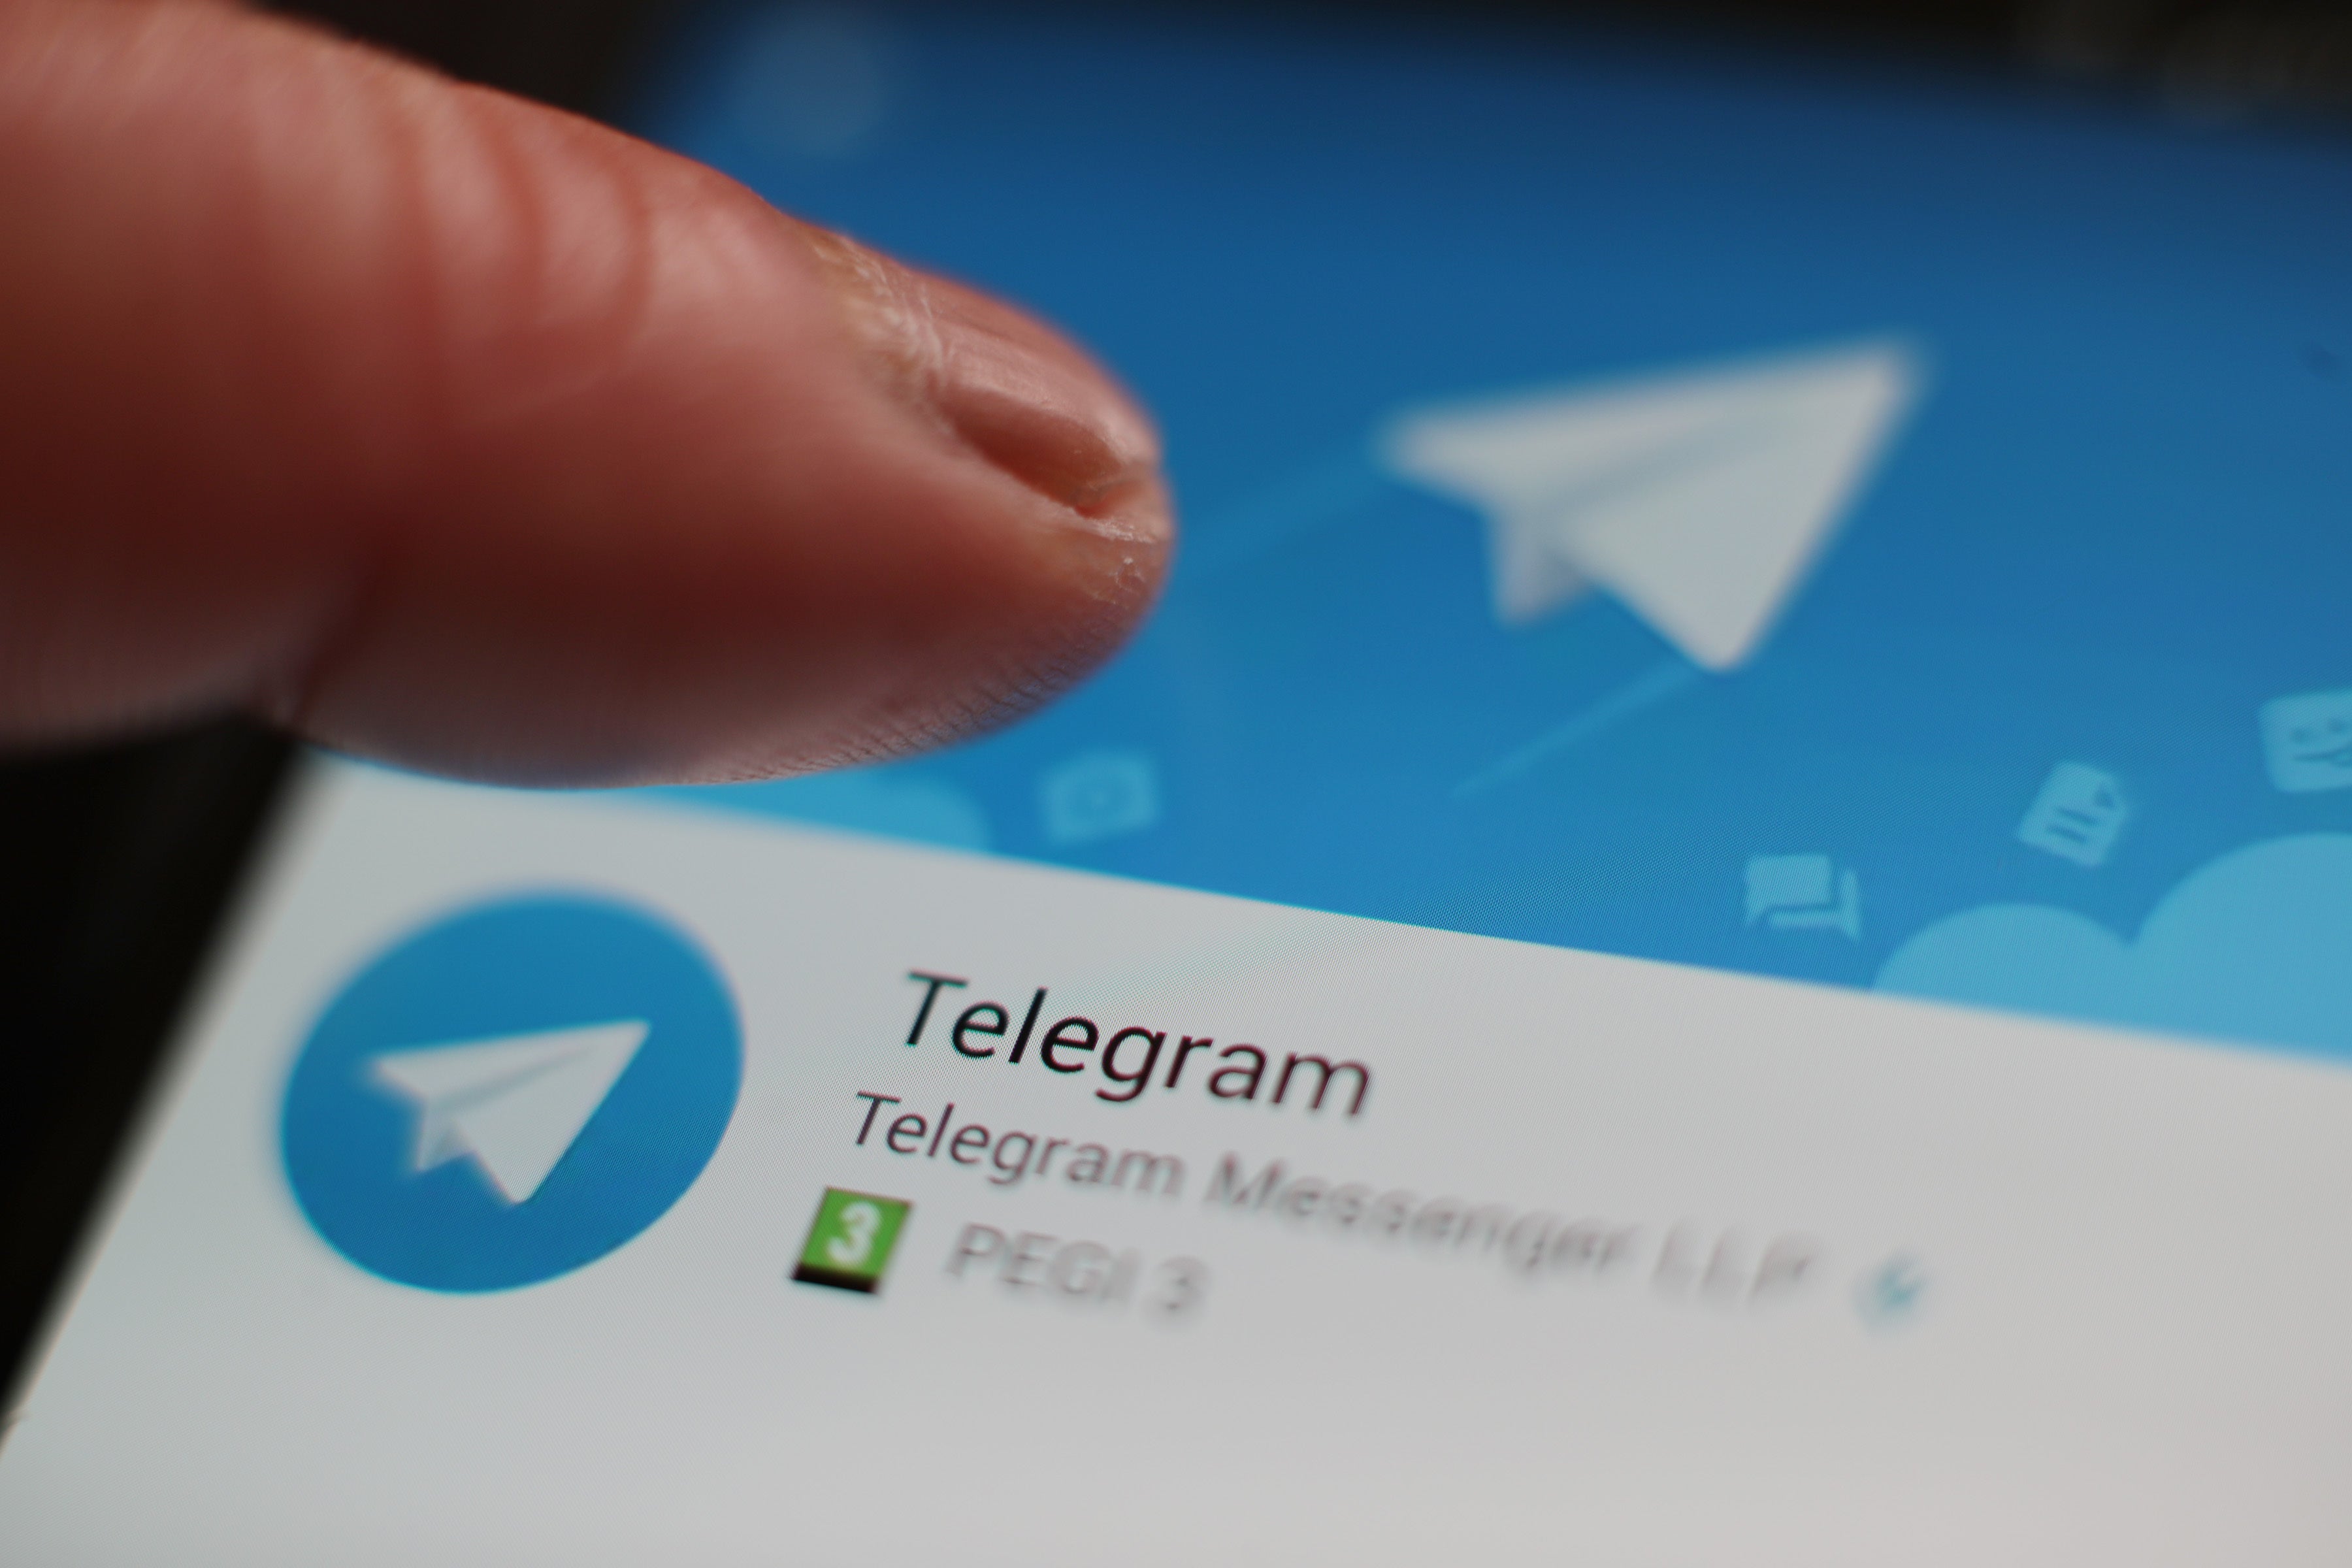 Telegram pictures. Телеграм. Телеграм в телефоне. Фото для телеграмма. Мессенджер телеграм.